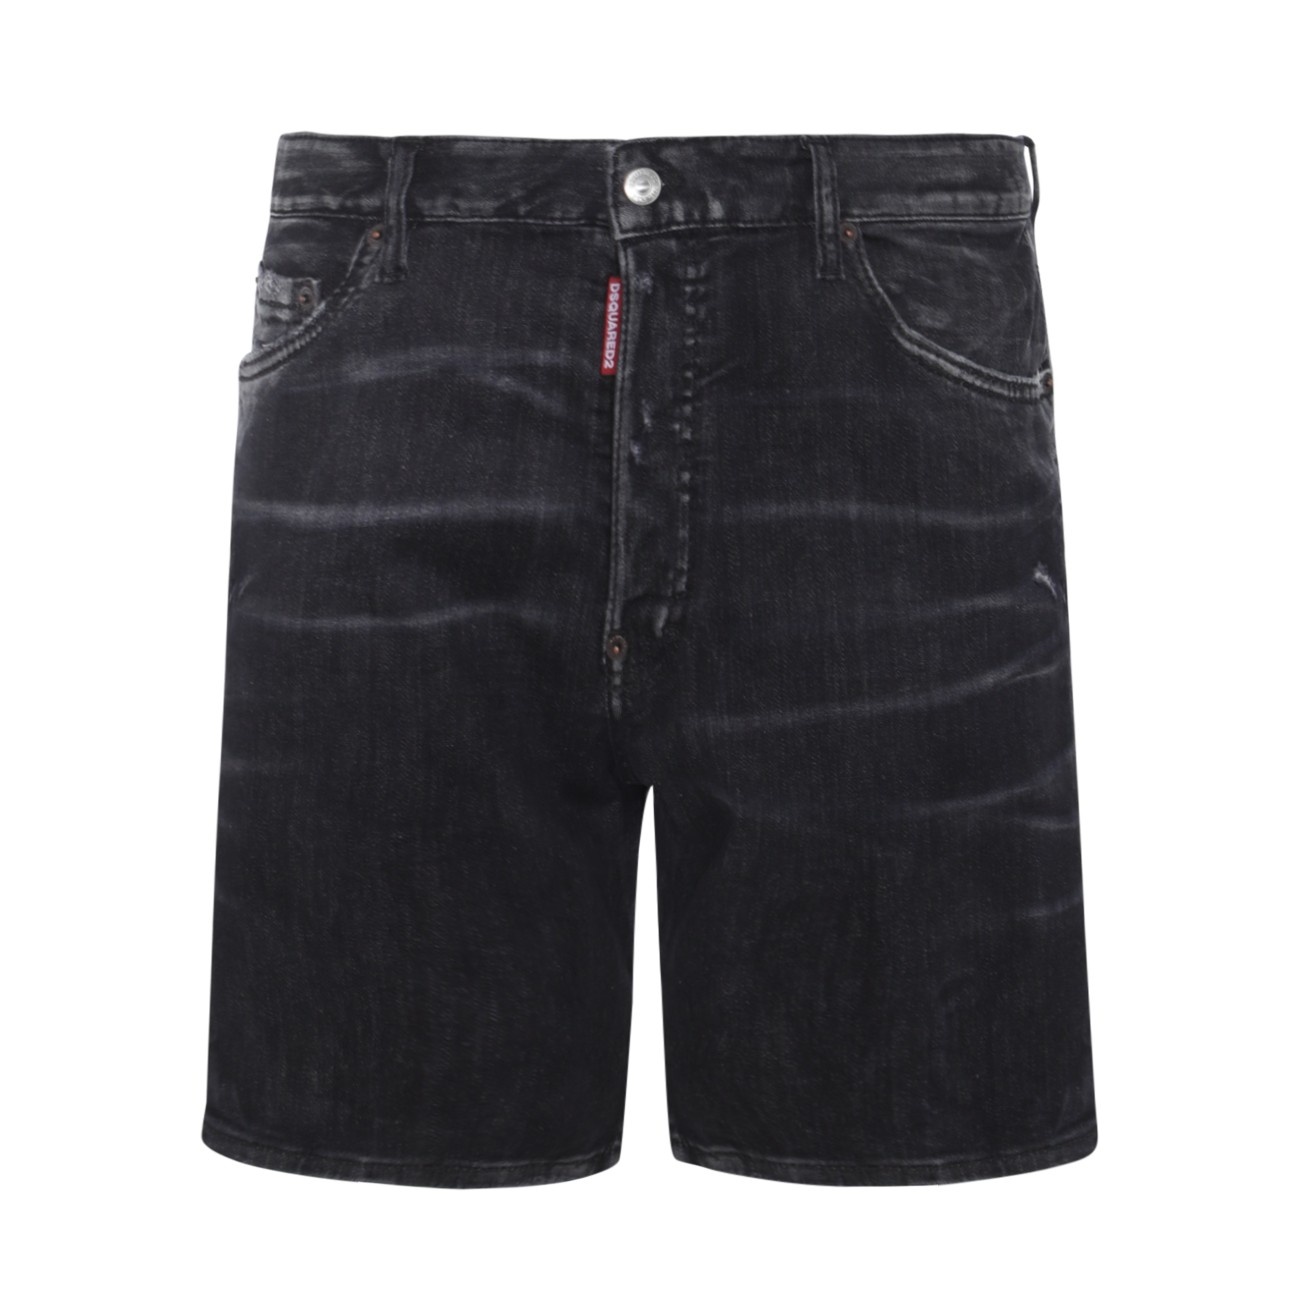 black cotton blend denim shorts - 1